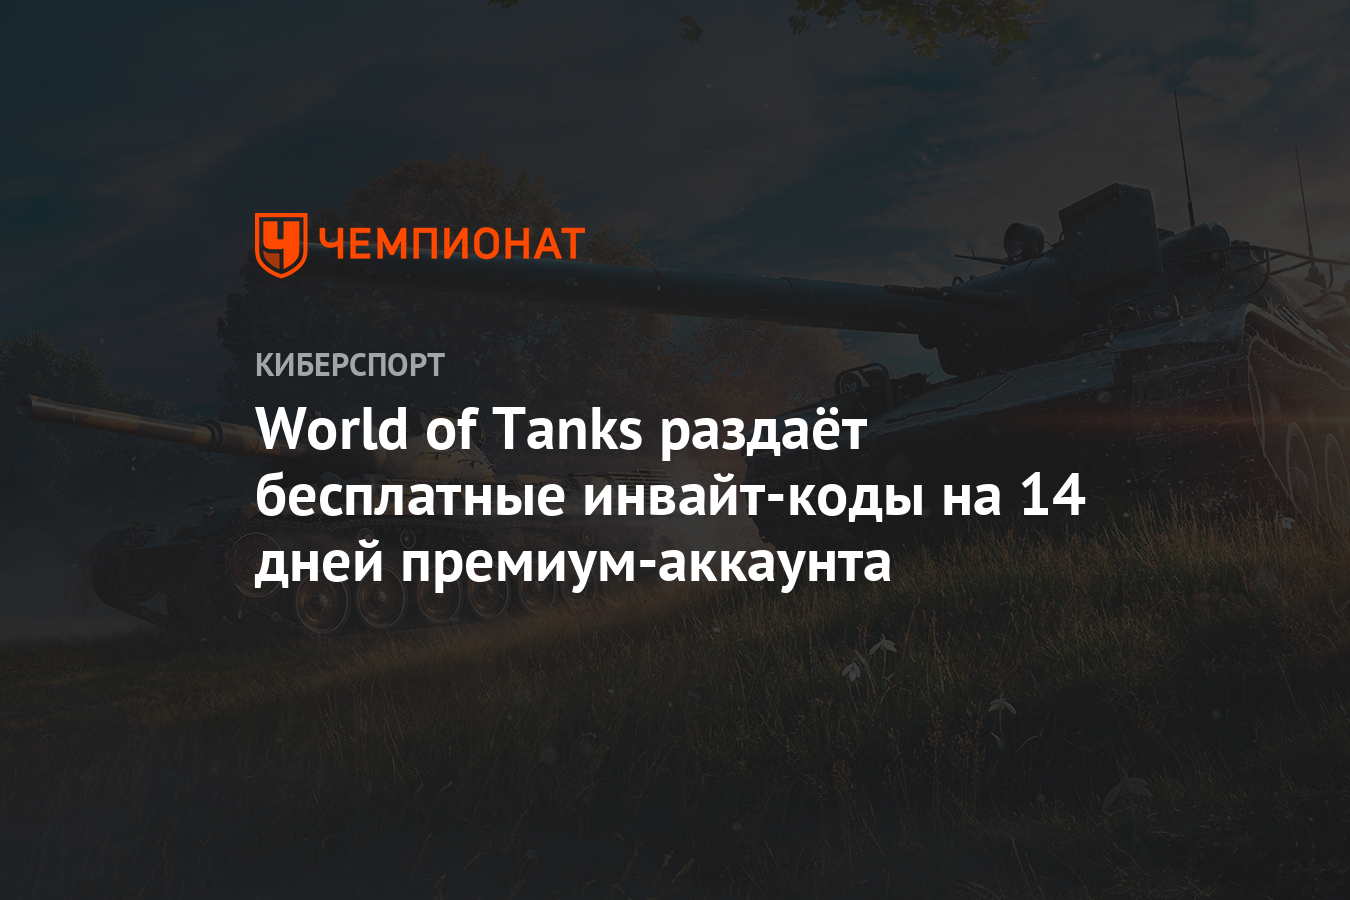 World of tanks раздача аккаунтов телеграмм фото 15